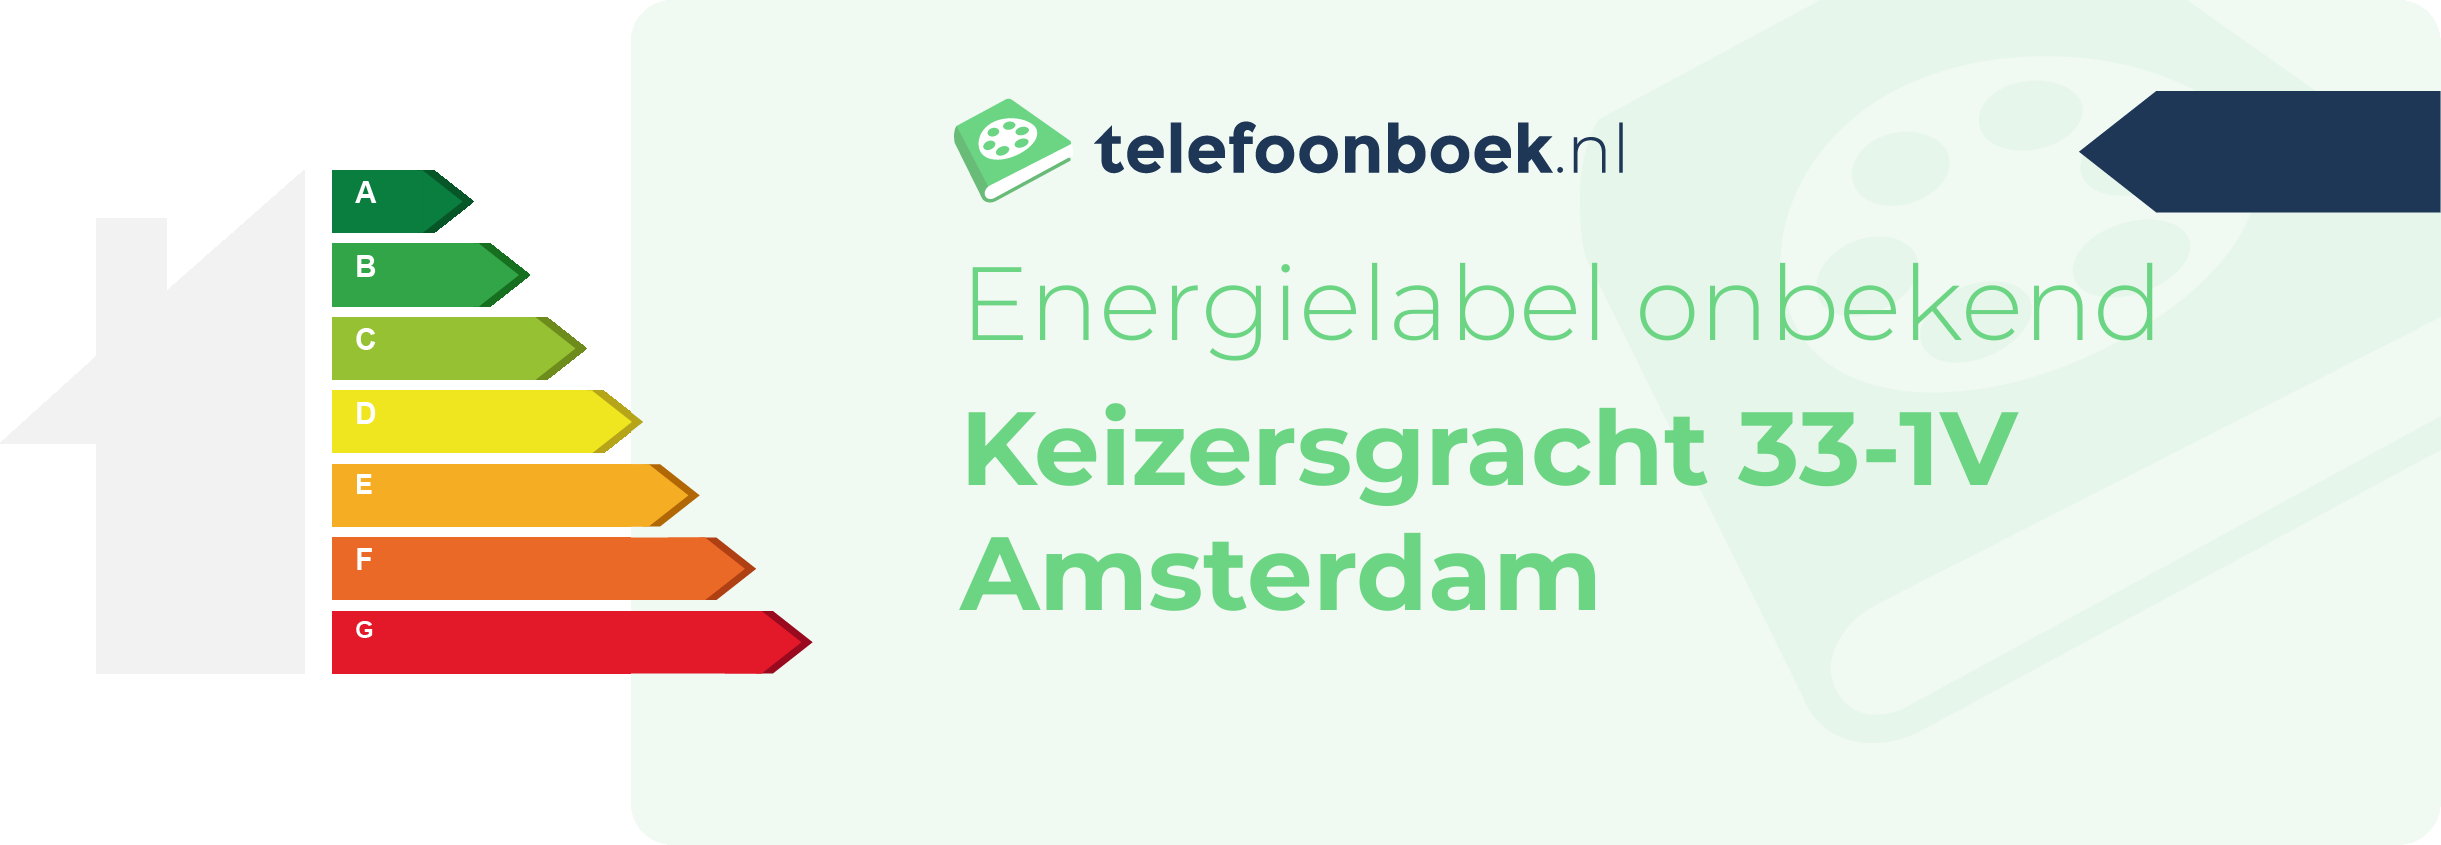 Energielabel Keizersgracht 33-1V Amsterdam